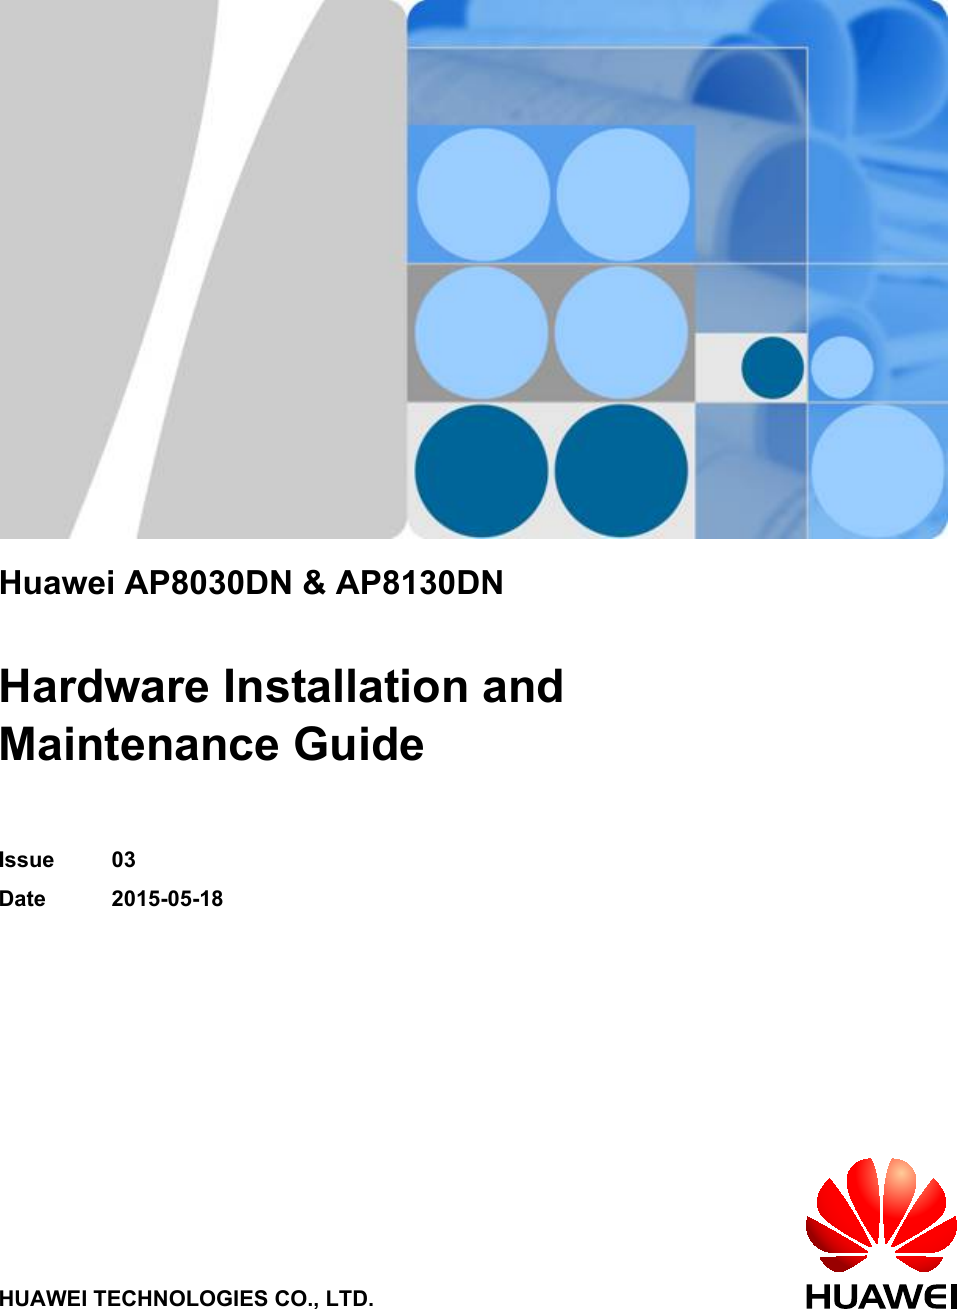 Huawei AP8030DN &amp; AP8130DNHardware Installation andMaintenance GuideIssue 03Date 2015-05-18HUAWEI TECHNOLOGIES CO., LTD.